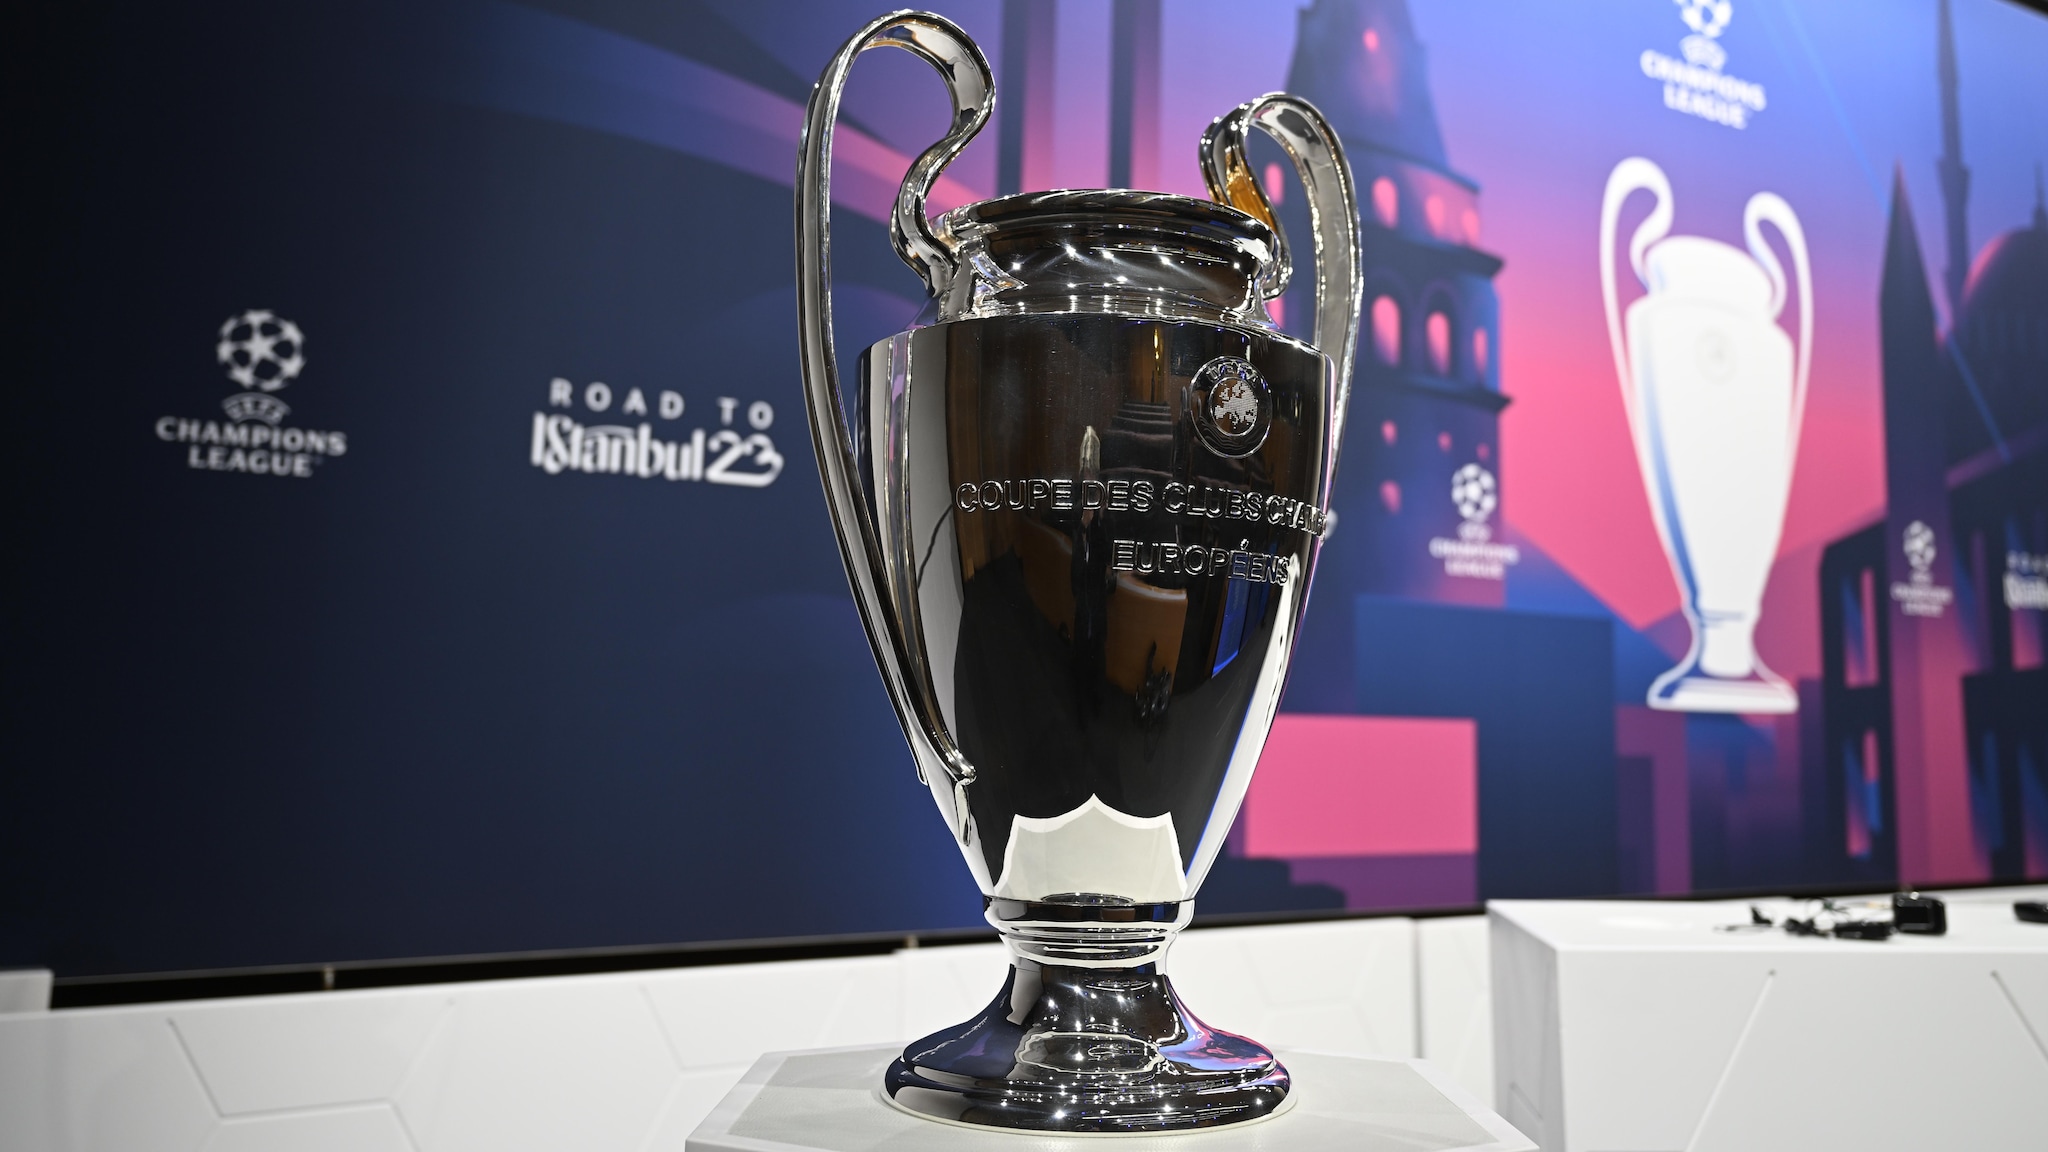 UEFA Champions League round of 16 draw | UEFA Champions League 2022/23 | UEFA.com